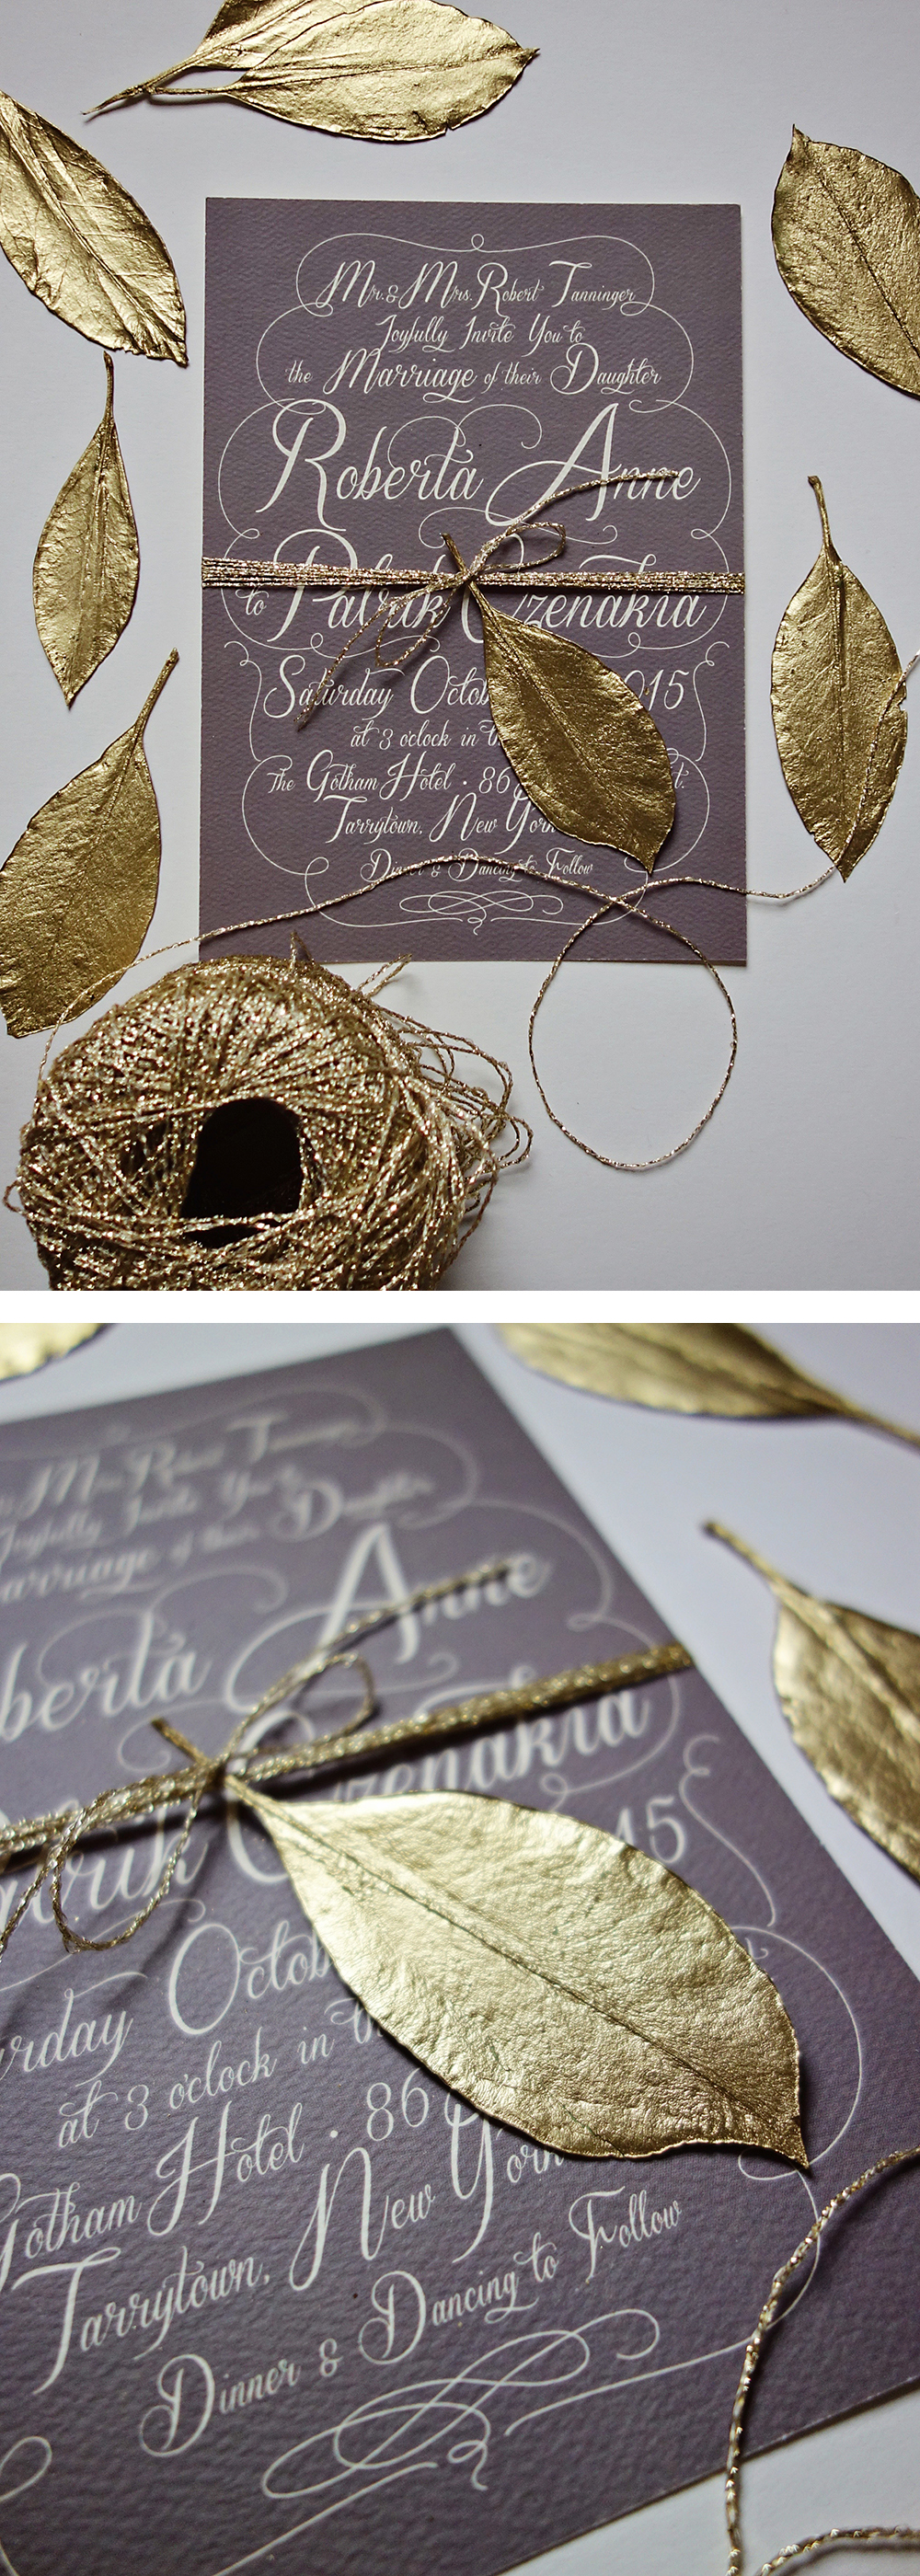 gold leaf embellishments for wedding invitations